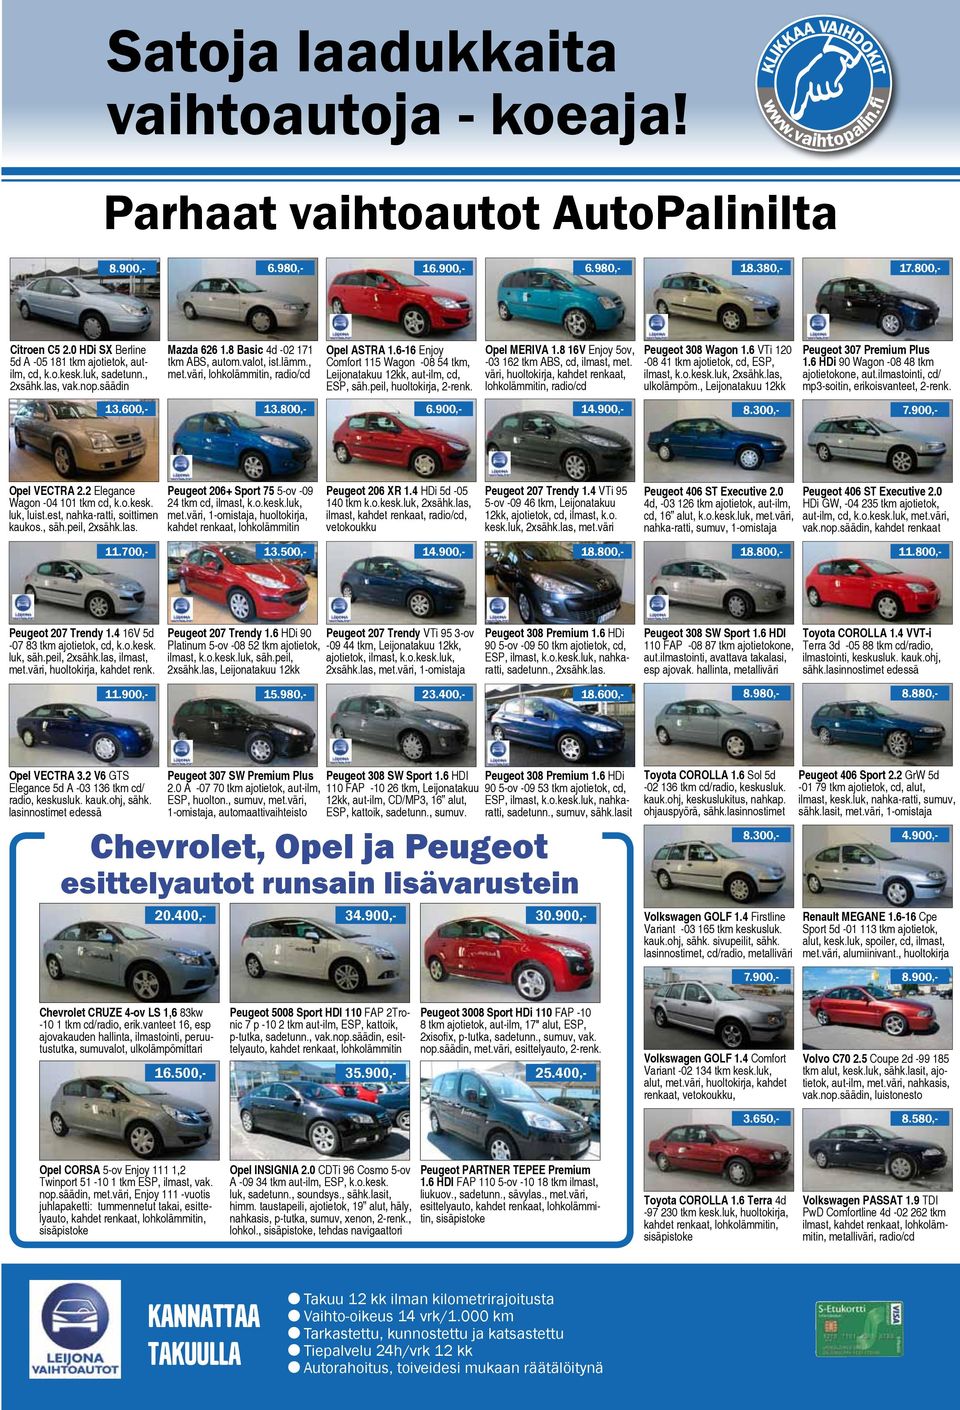 6-16 Enjoy Comfort 115 Wagon -08 54 tkm, Leijonatakuu 12kk, aut-ilm, cd, ESP, säh.peil, huoltokirja, 2-renk. Opel MERIVA 1.8 16V Enjoy 5ov, -03 162 tkm ABS, cd, ilmast, met.